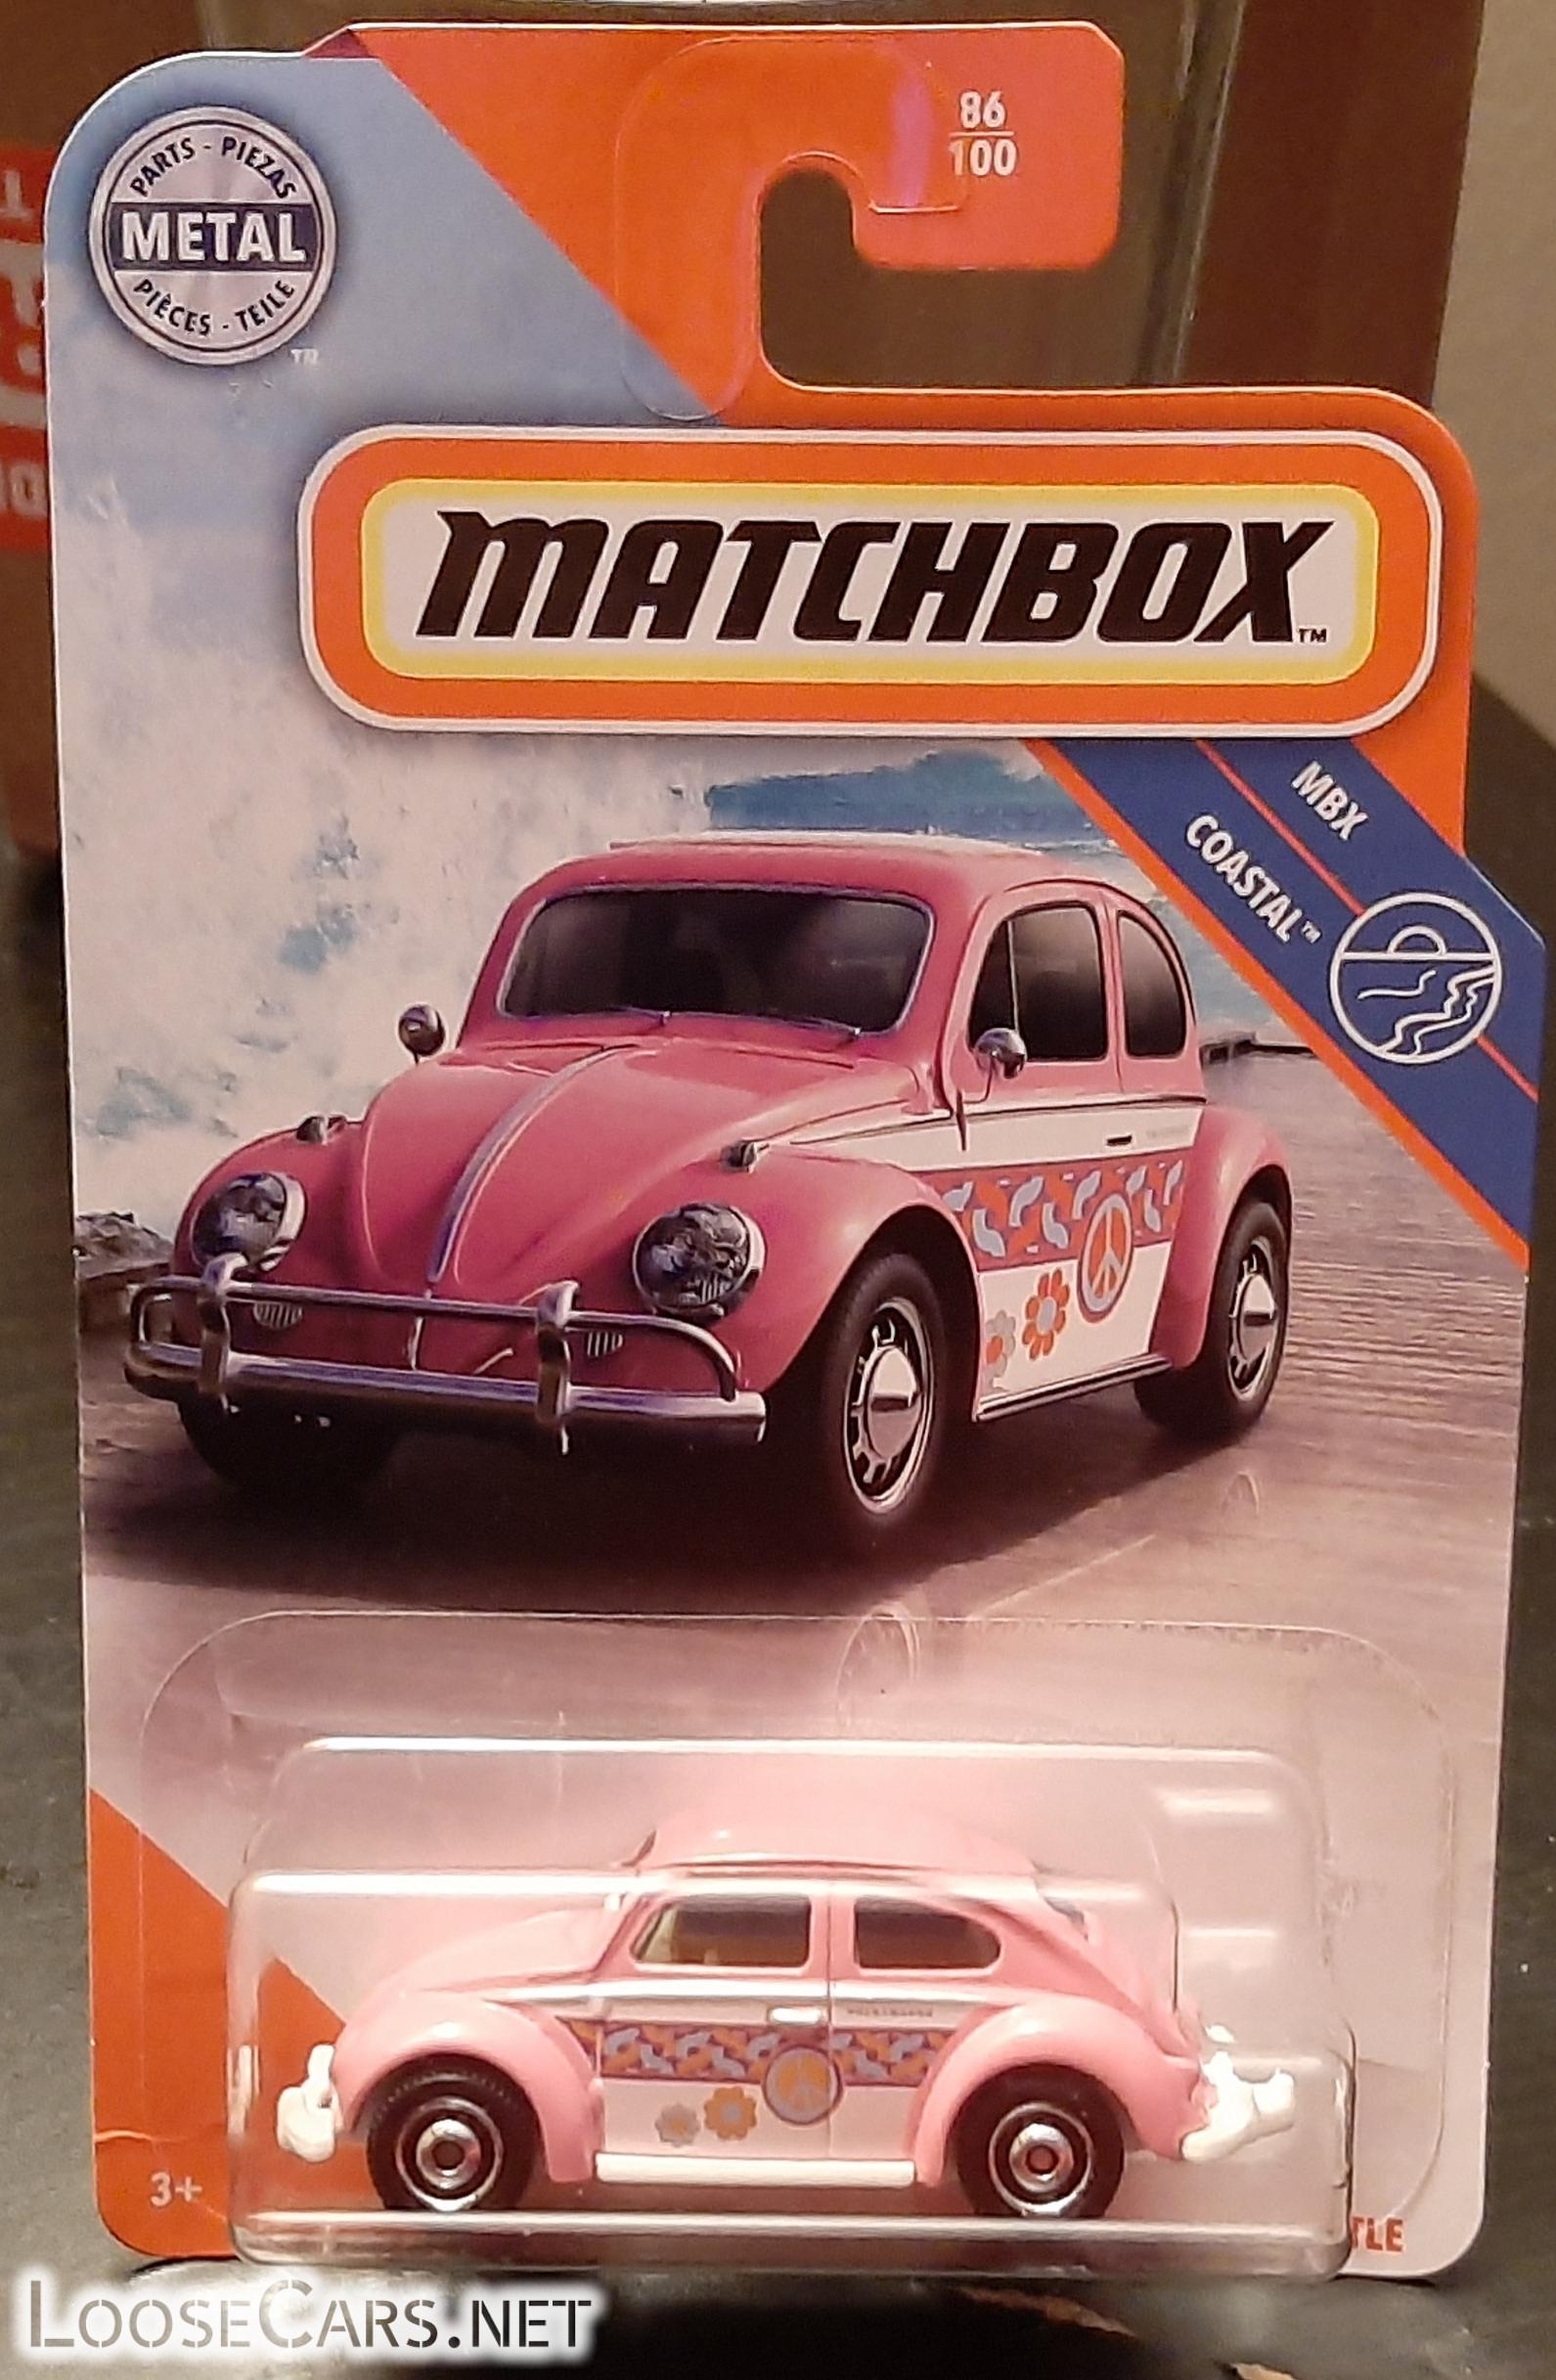 Matchbox 1967 Volkswagen Beetle: 2002 #86 Carded